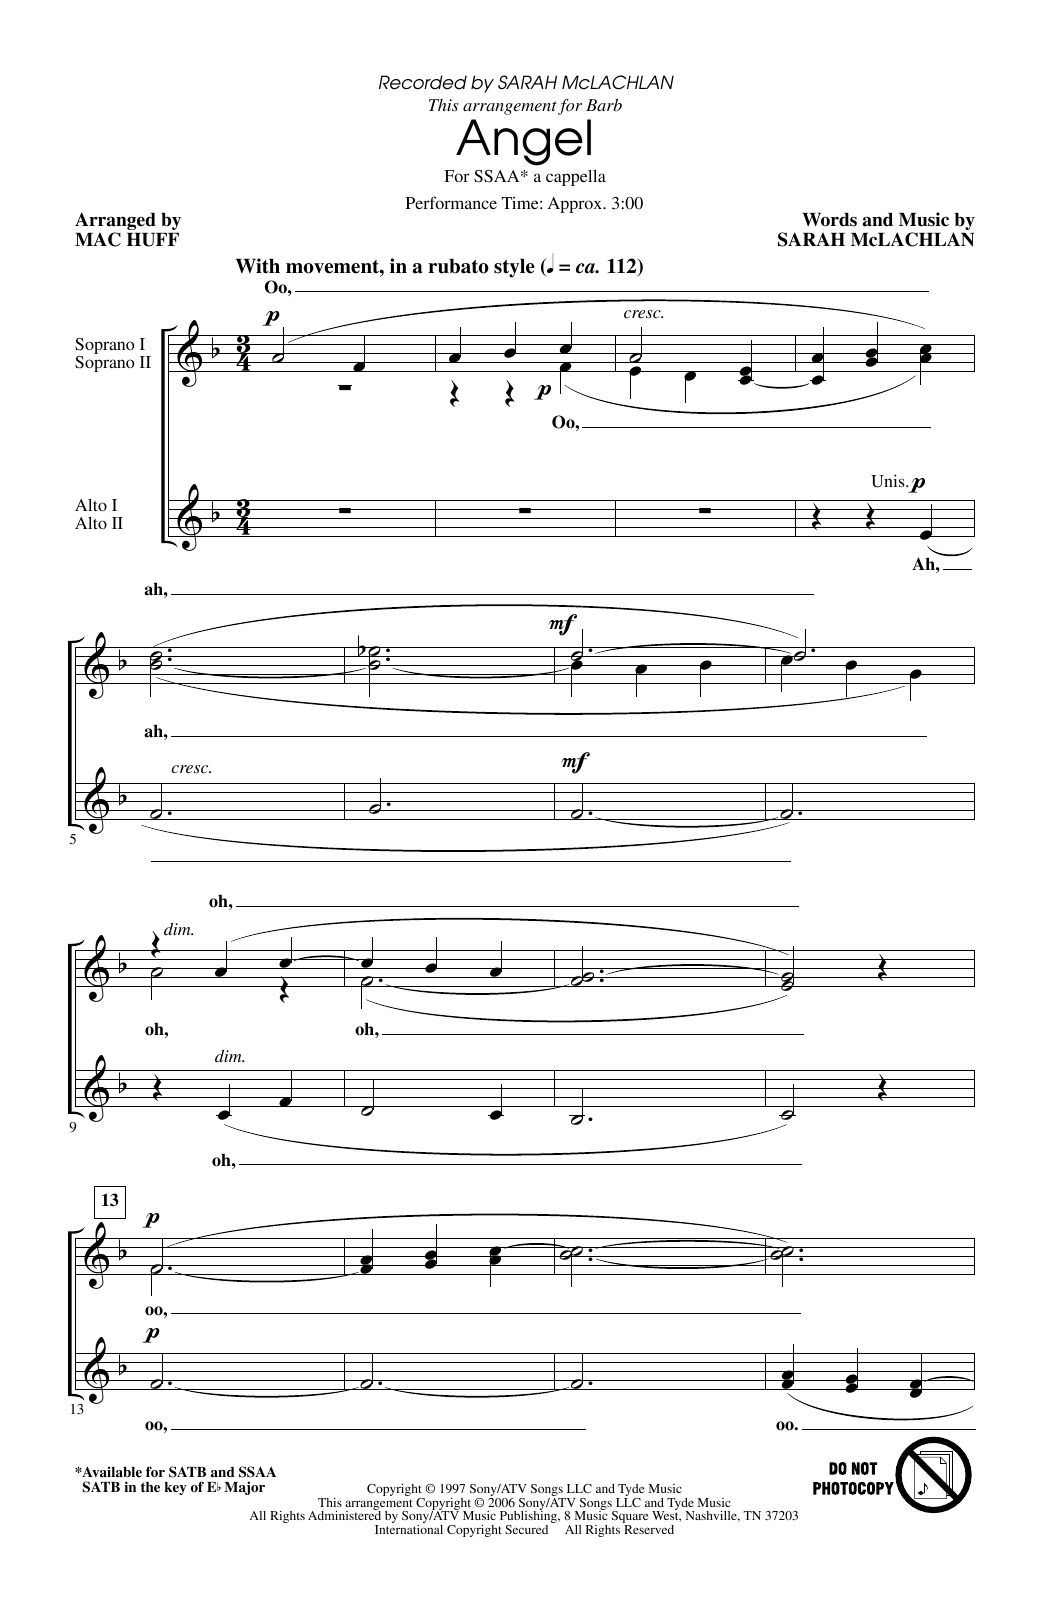 Sarah McLachlan Angel (arr. Mac Huff) Sheet Music Notes & Chords for SATB Choir - Download or Print PDF